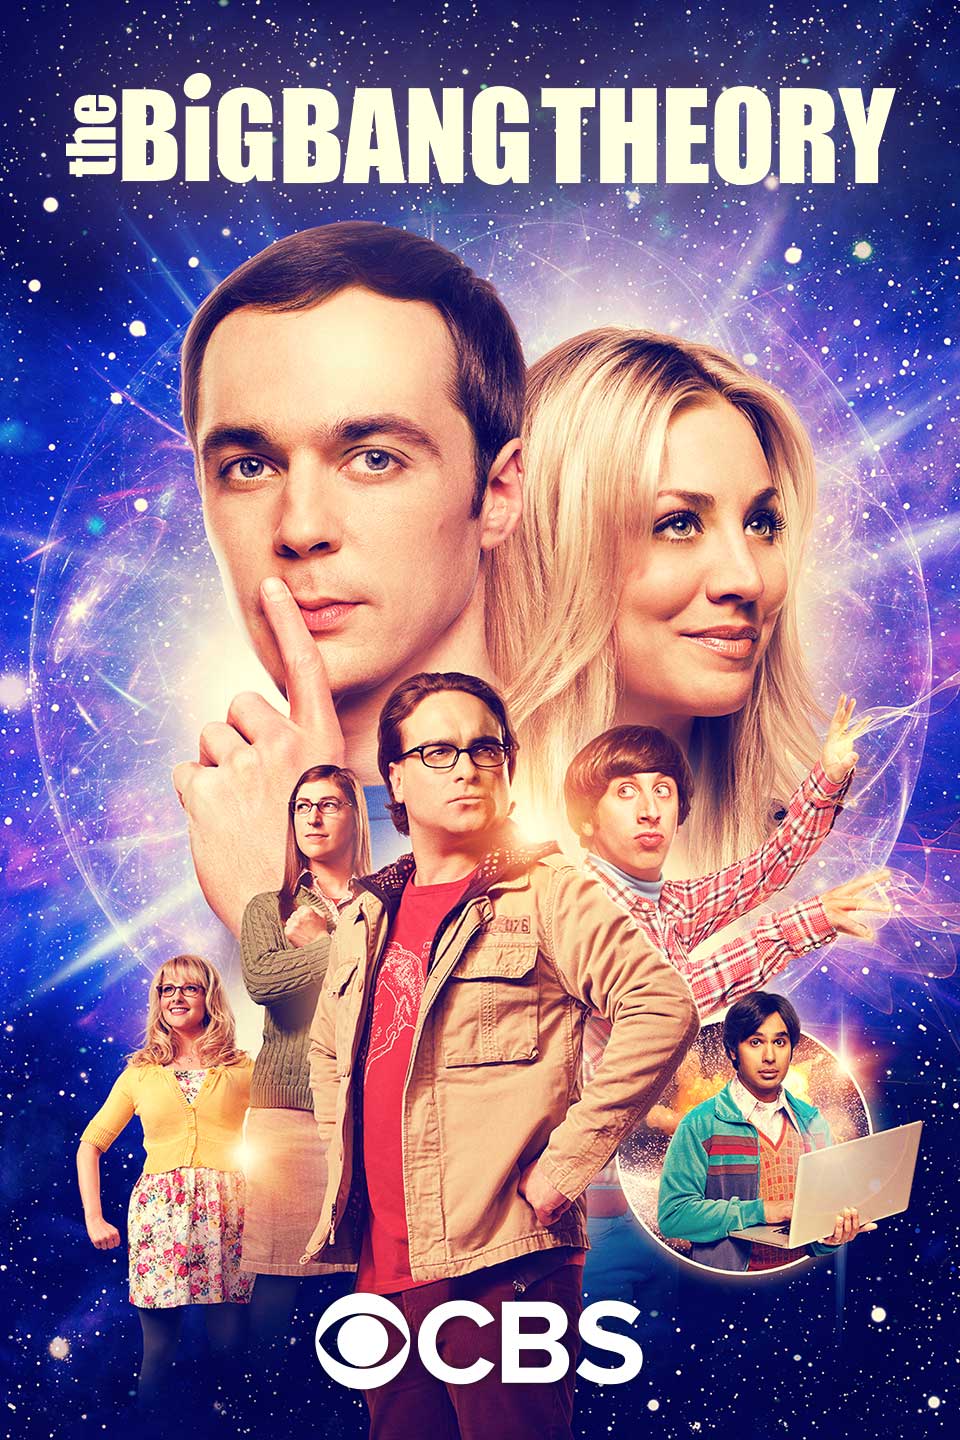 The Big Bang Theory comedy web series